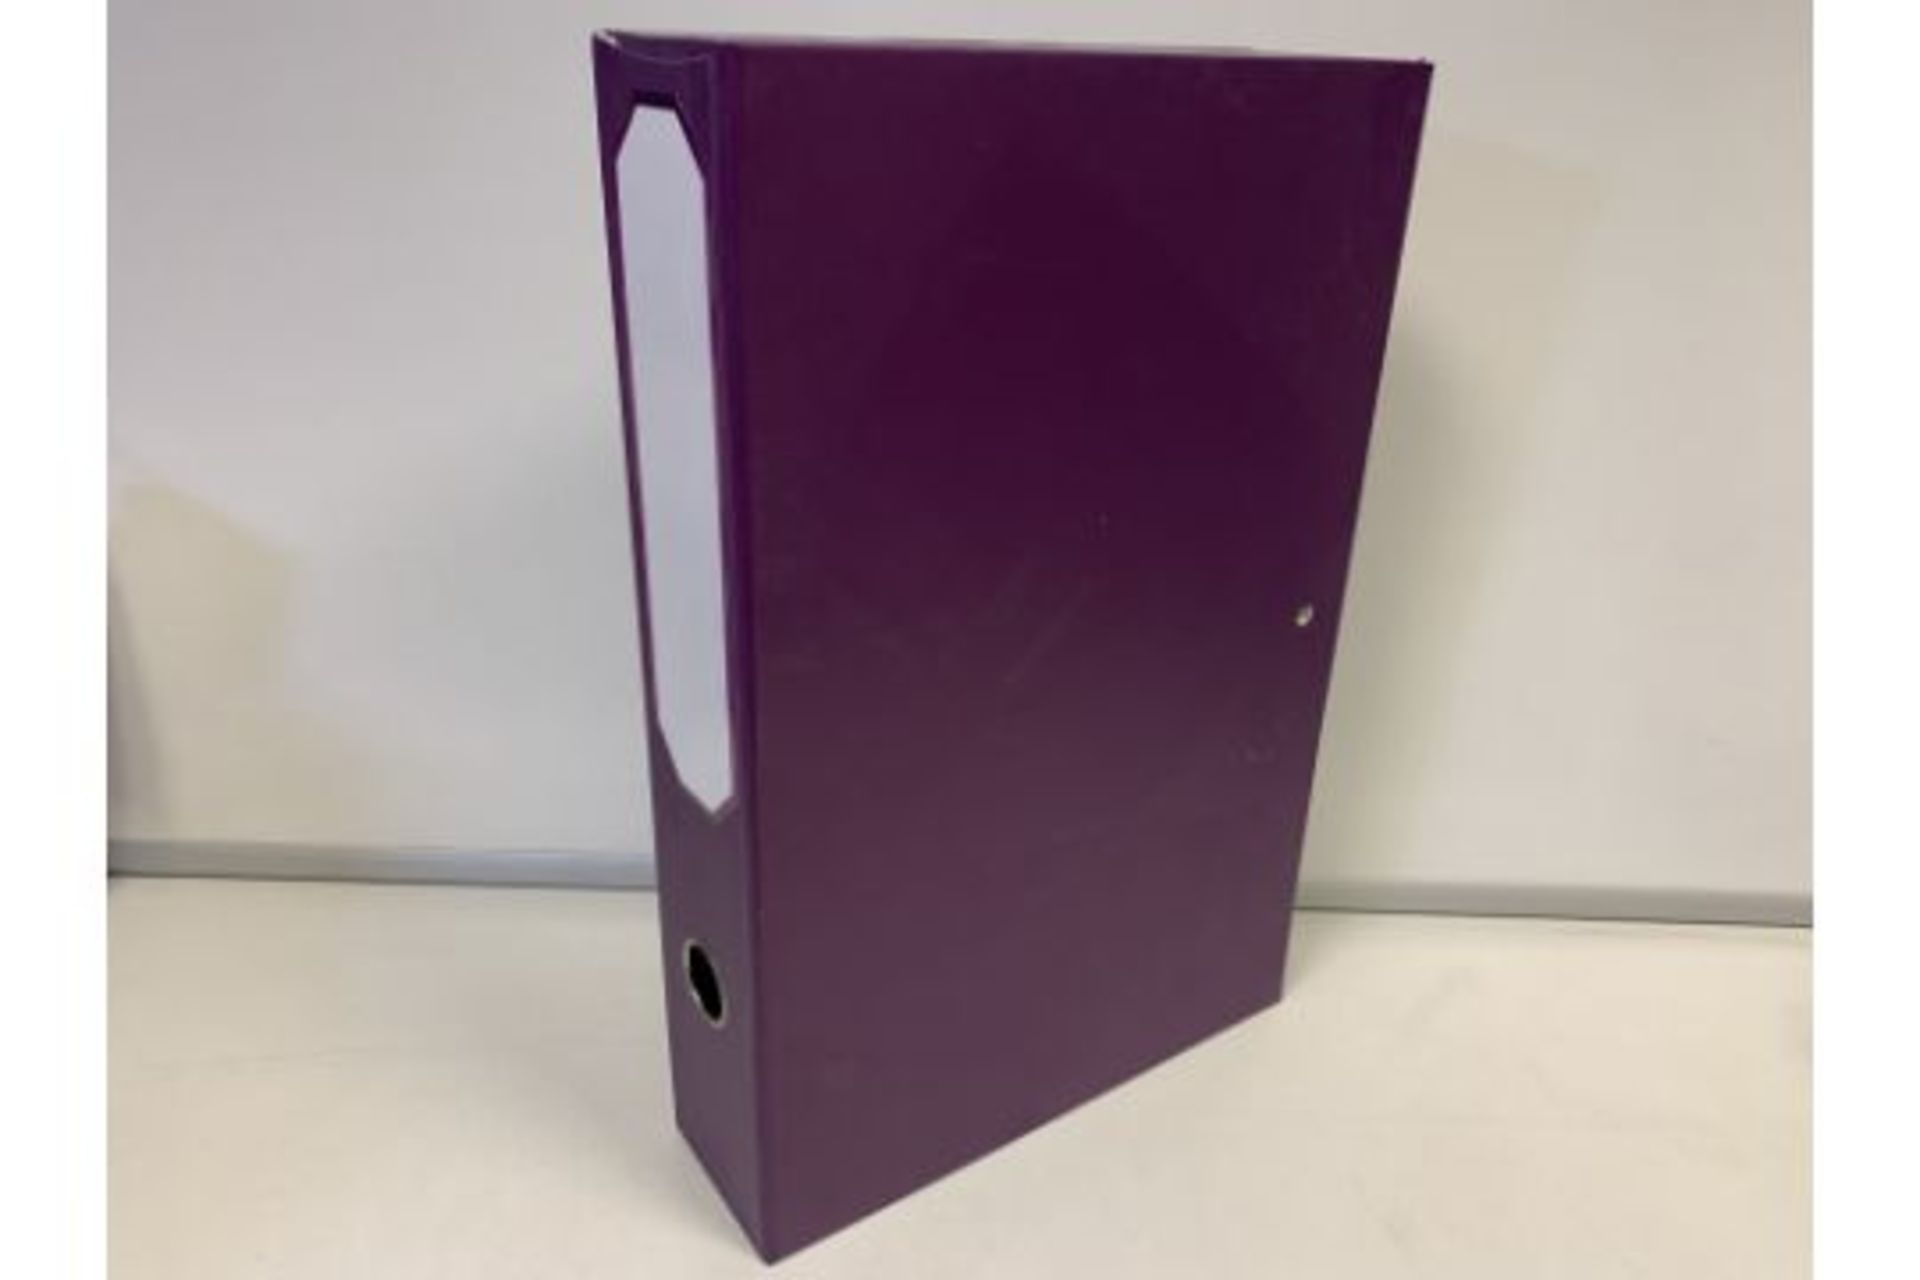 30 X BRAND NEW PURPLE BUTTON PUSH BOX FILES IN 3 BOXES